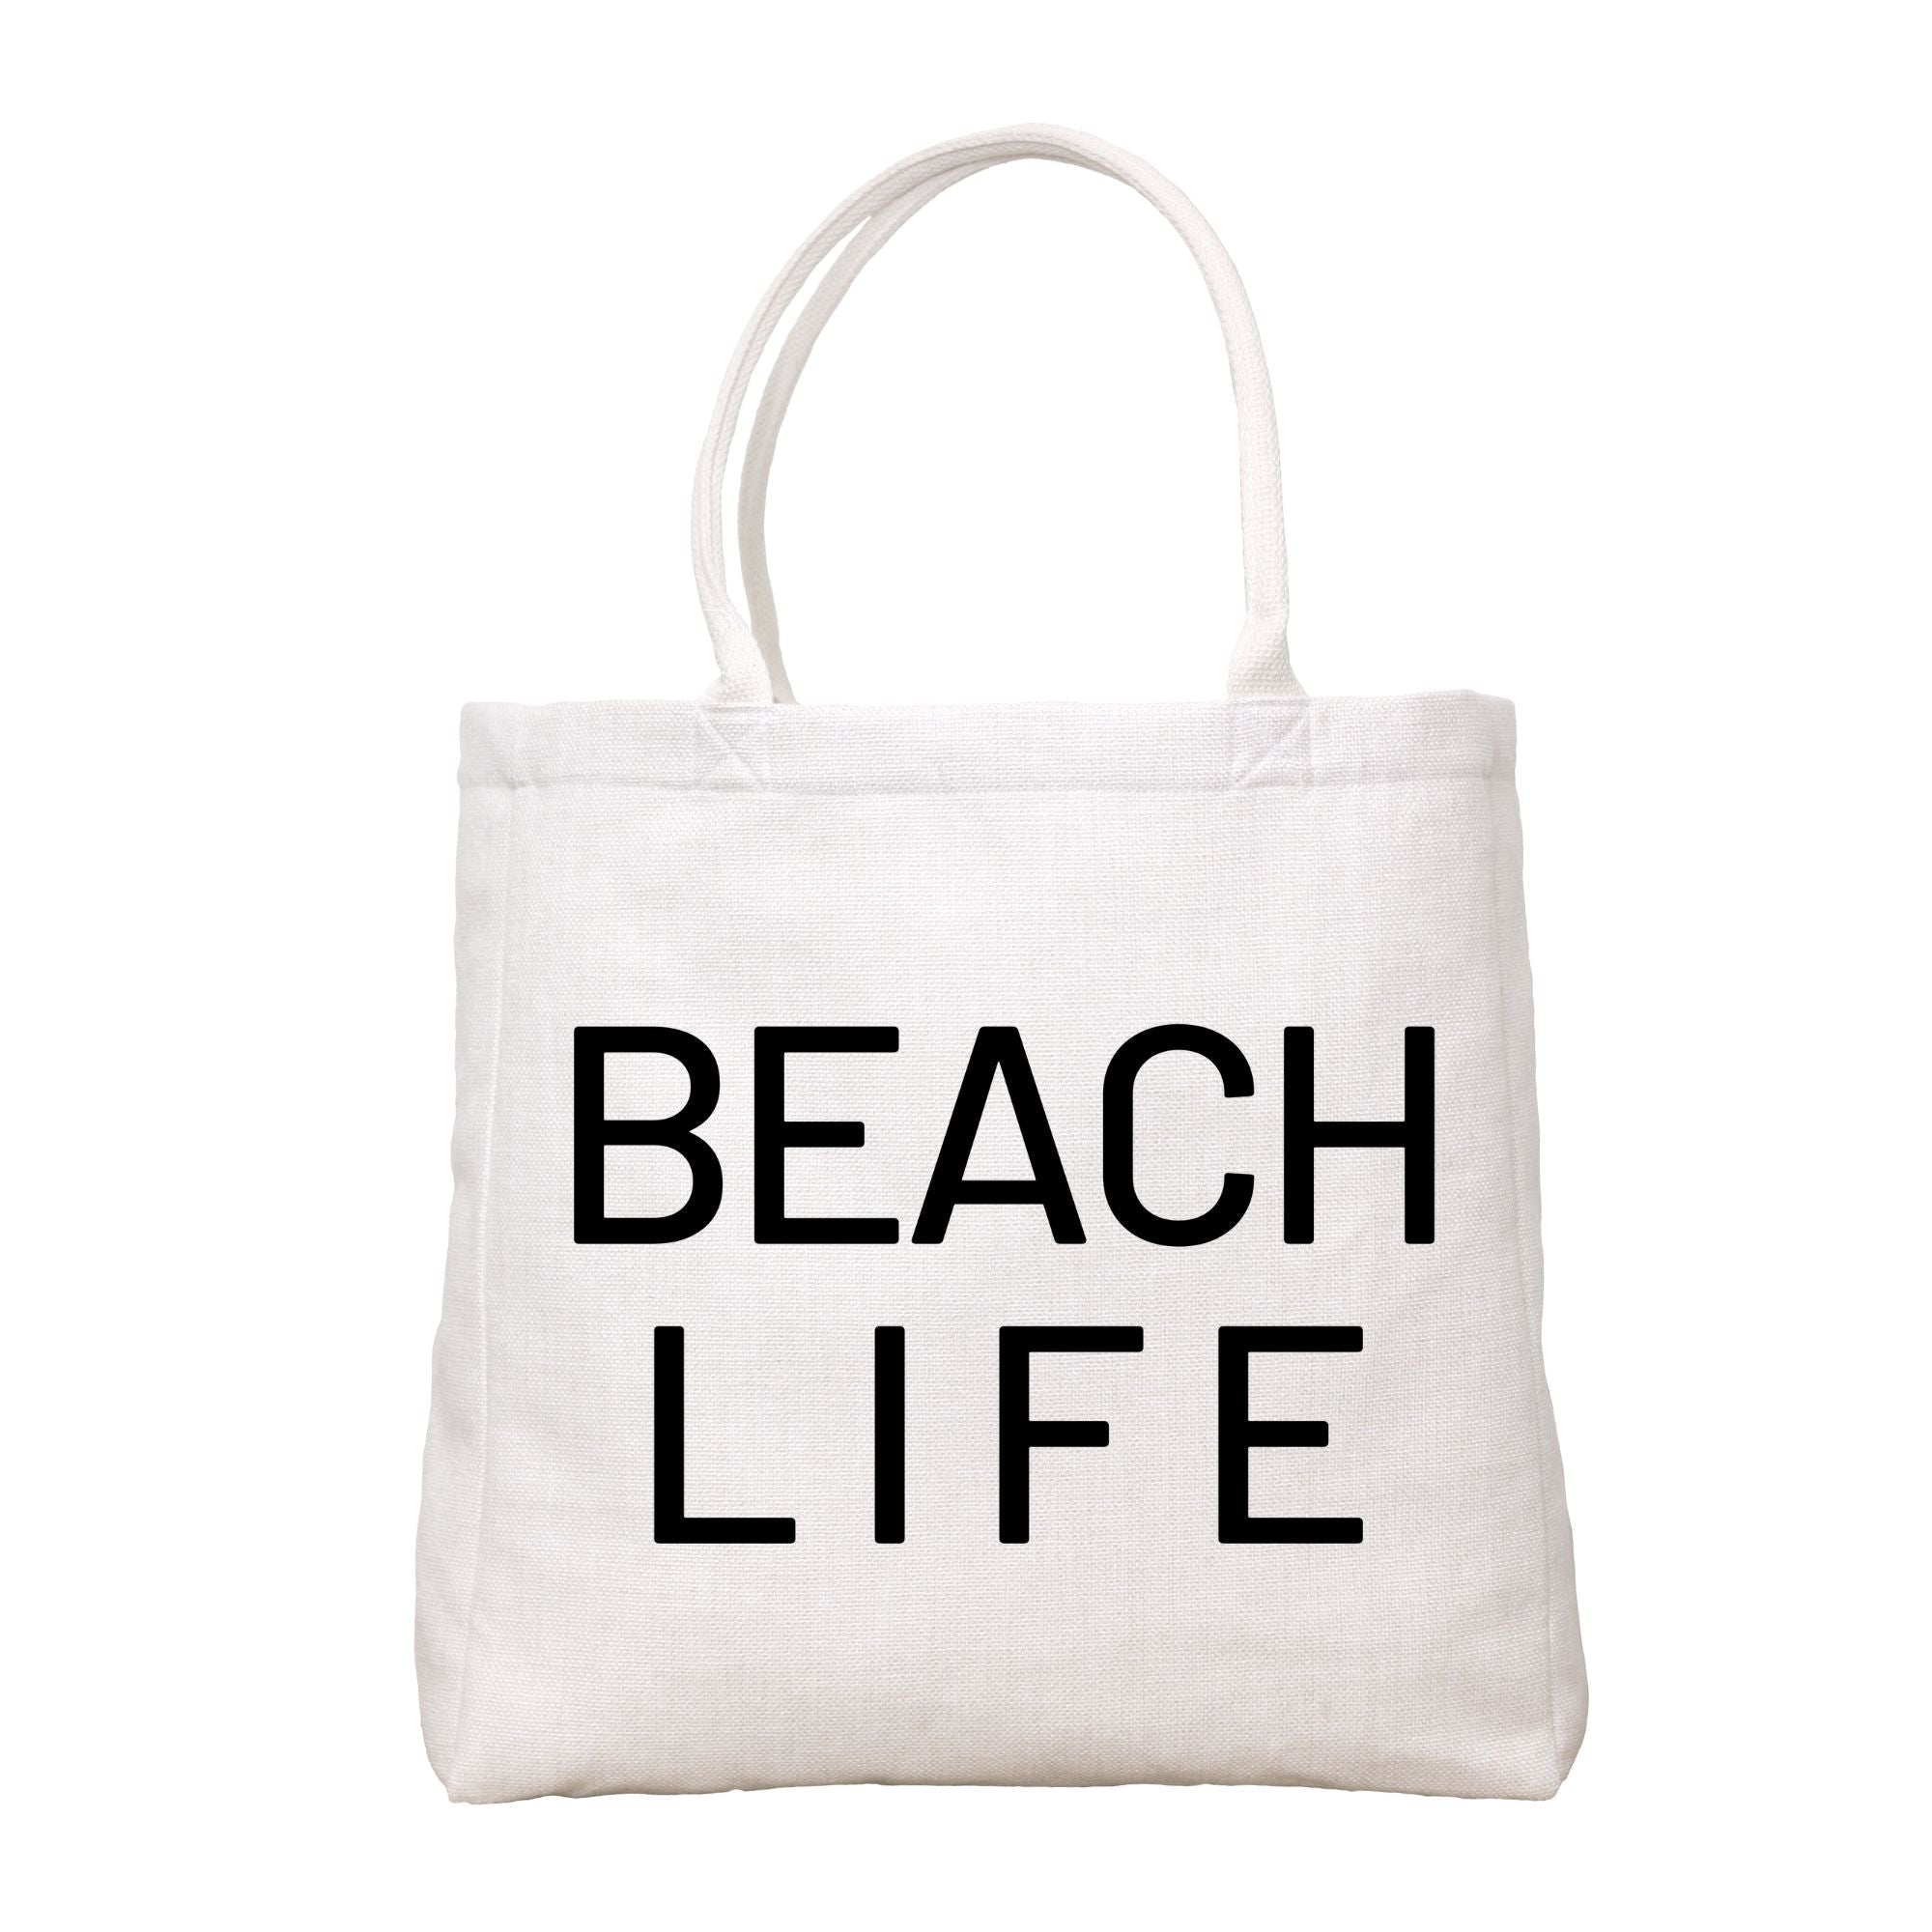 Beach Life Text Tote Bag